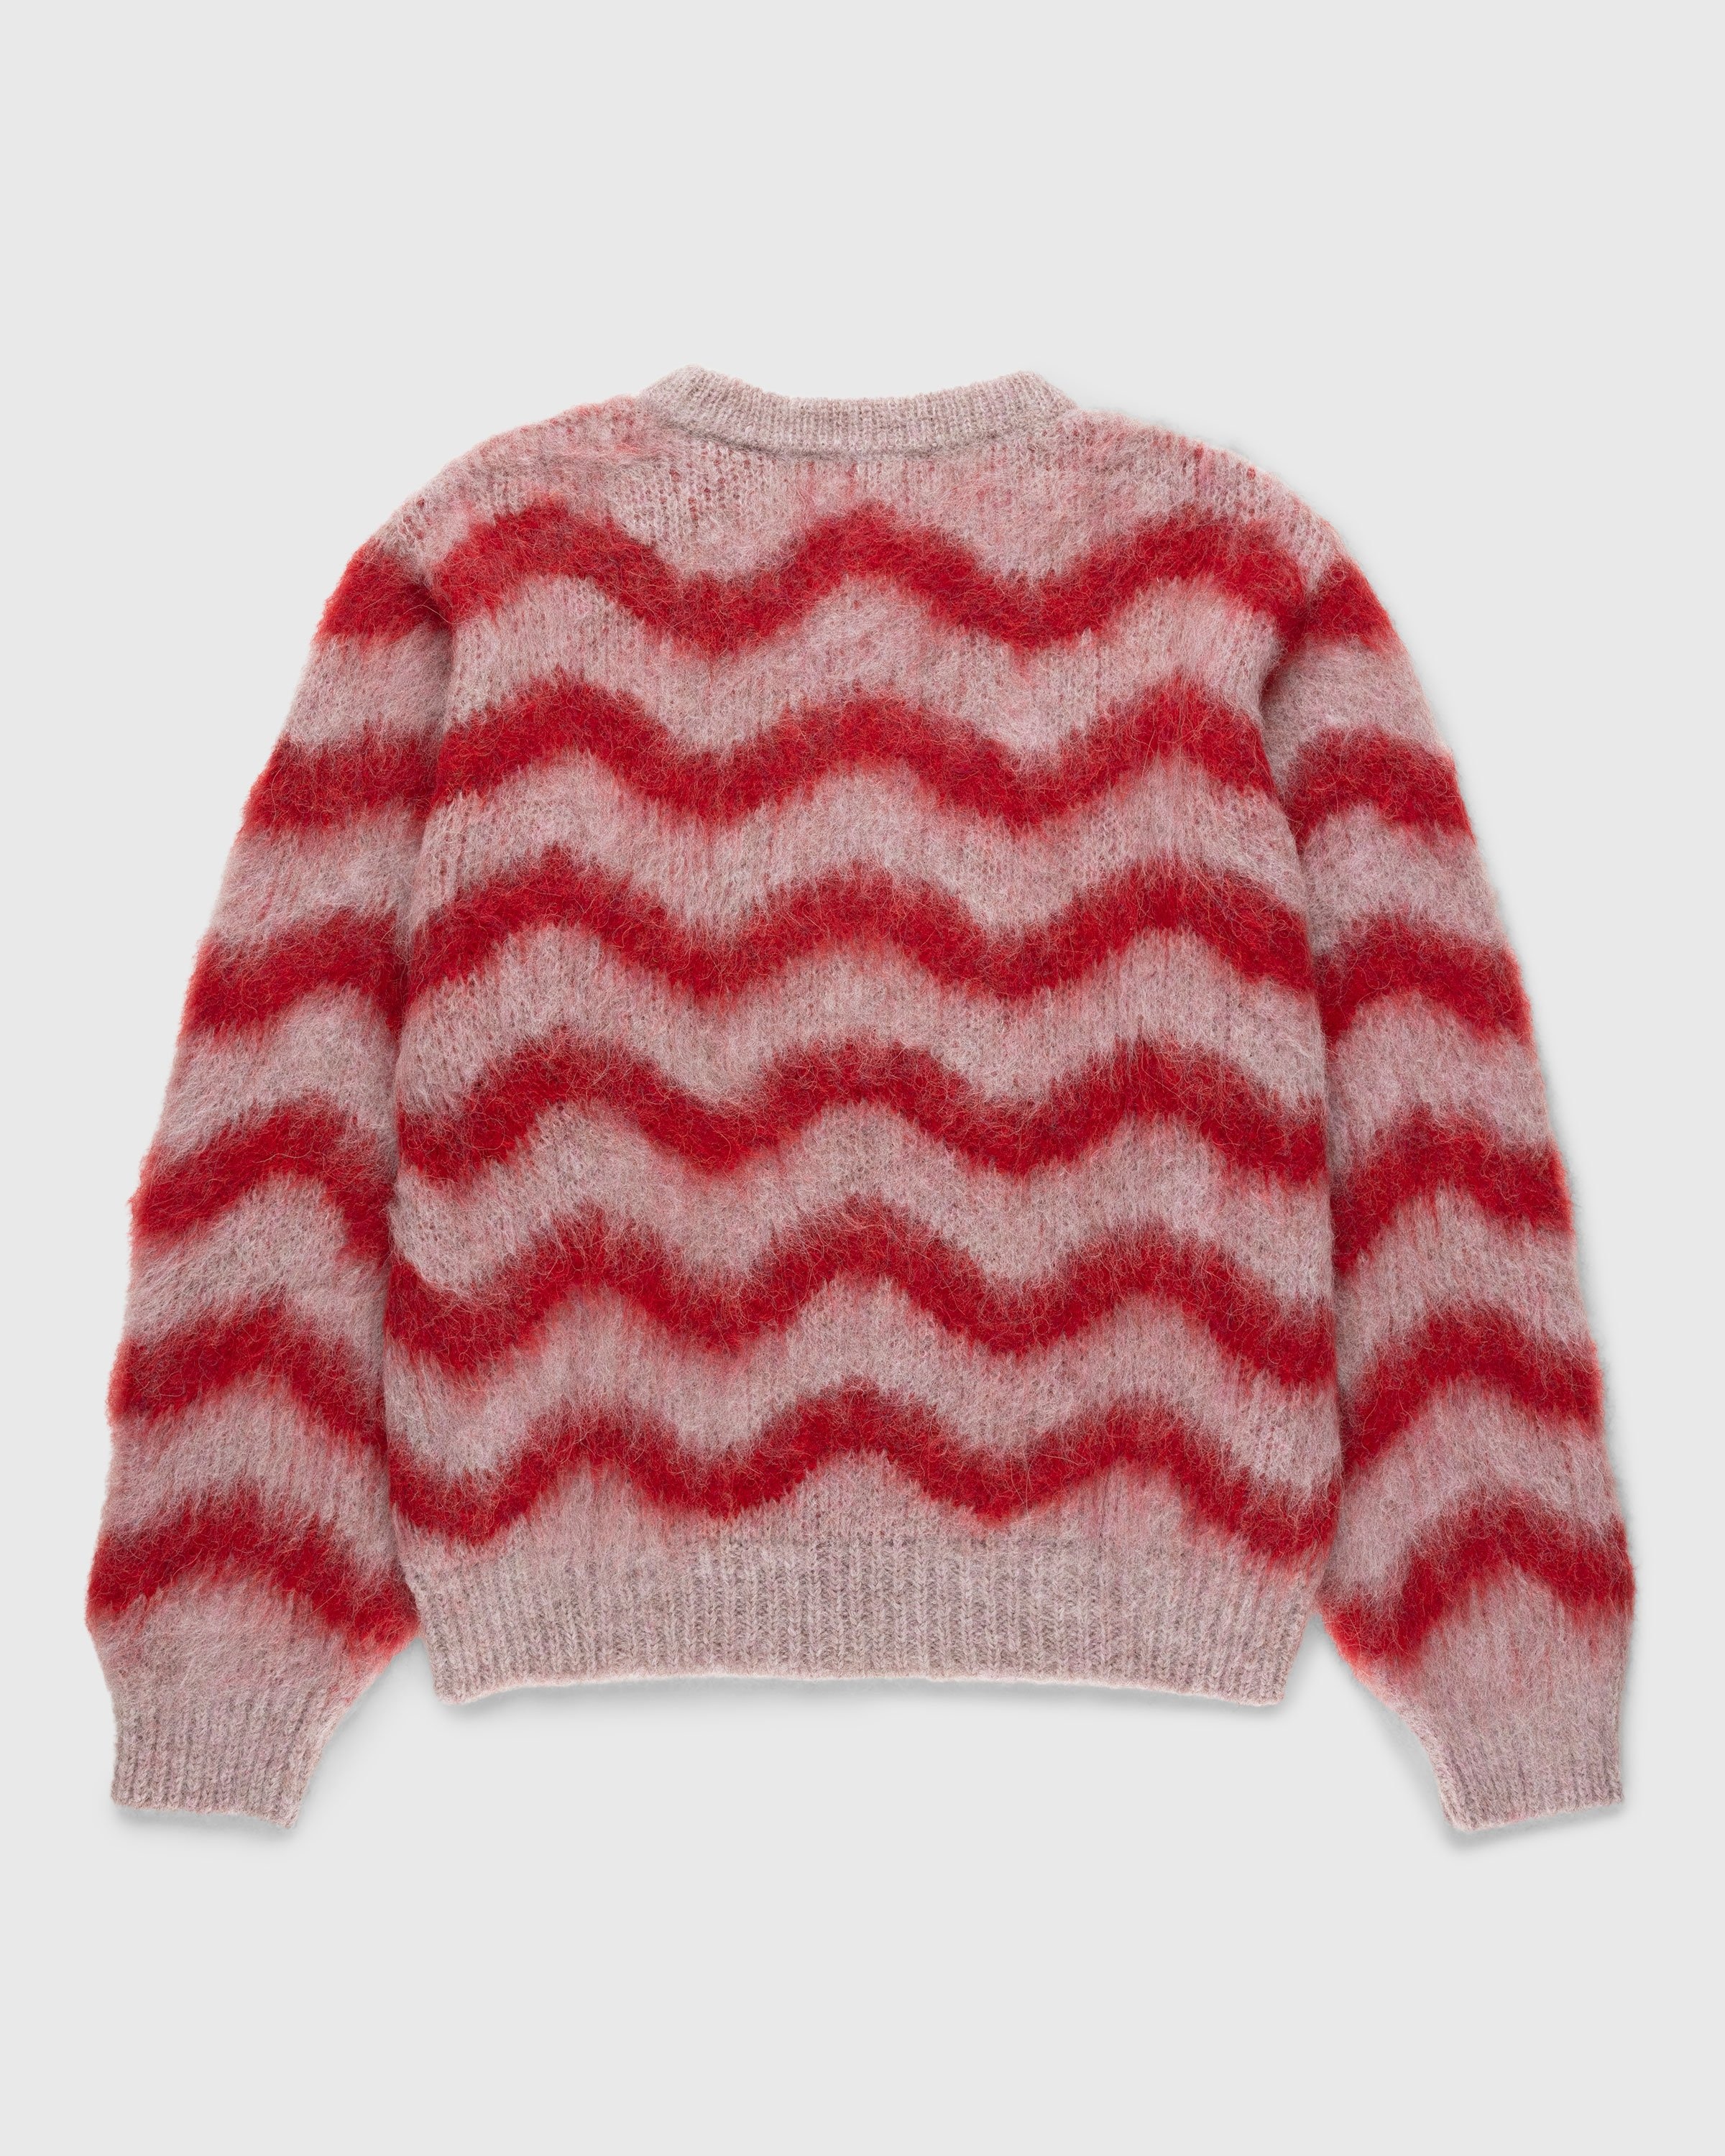 Highsnobiety HS05 – Alpaca Fuzzy Wave Sweater Pale Rose/Red - Knitwear - Multi - Image 2